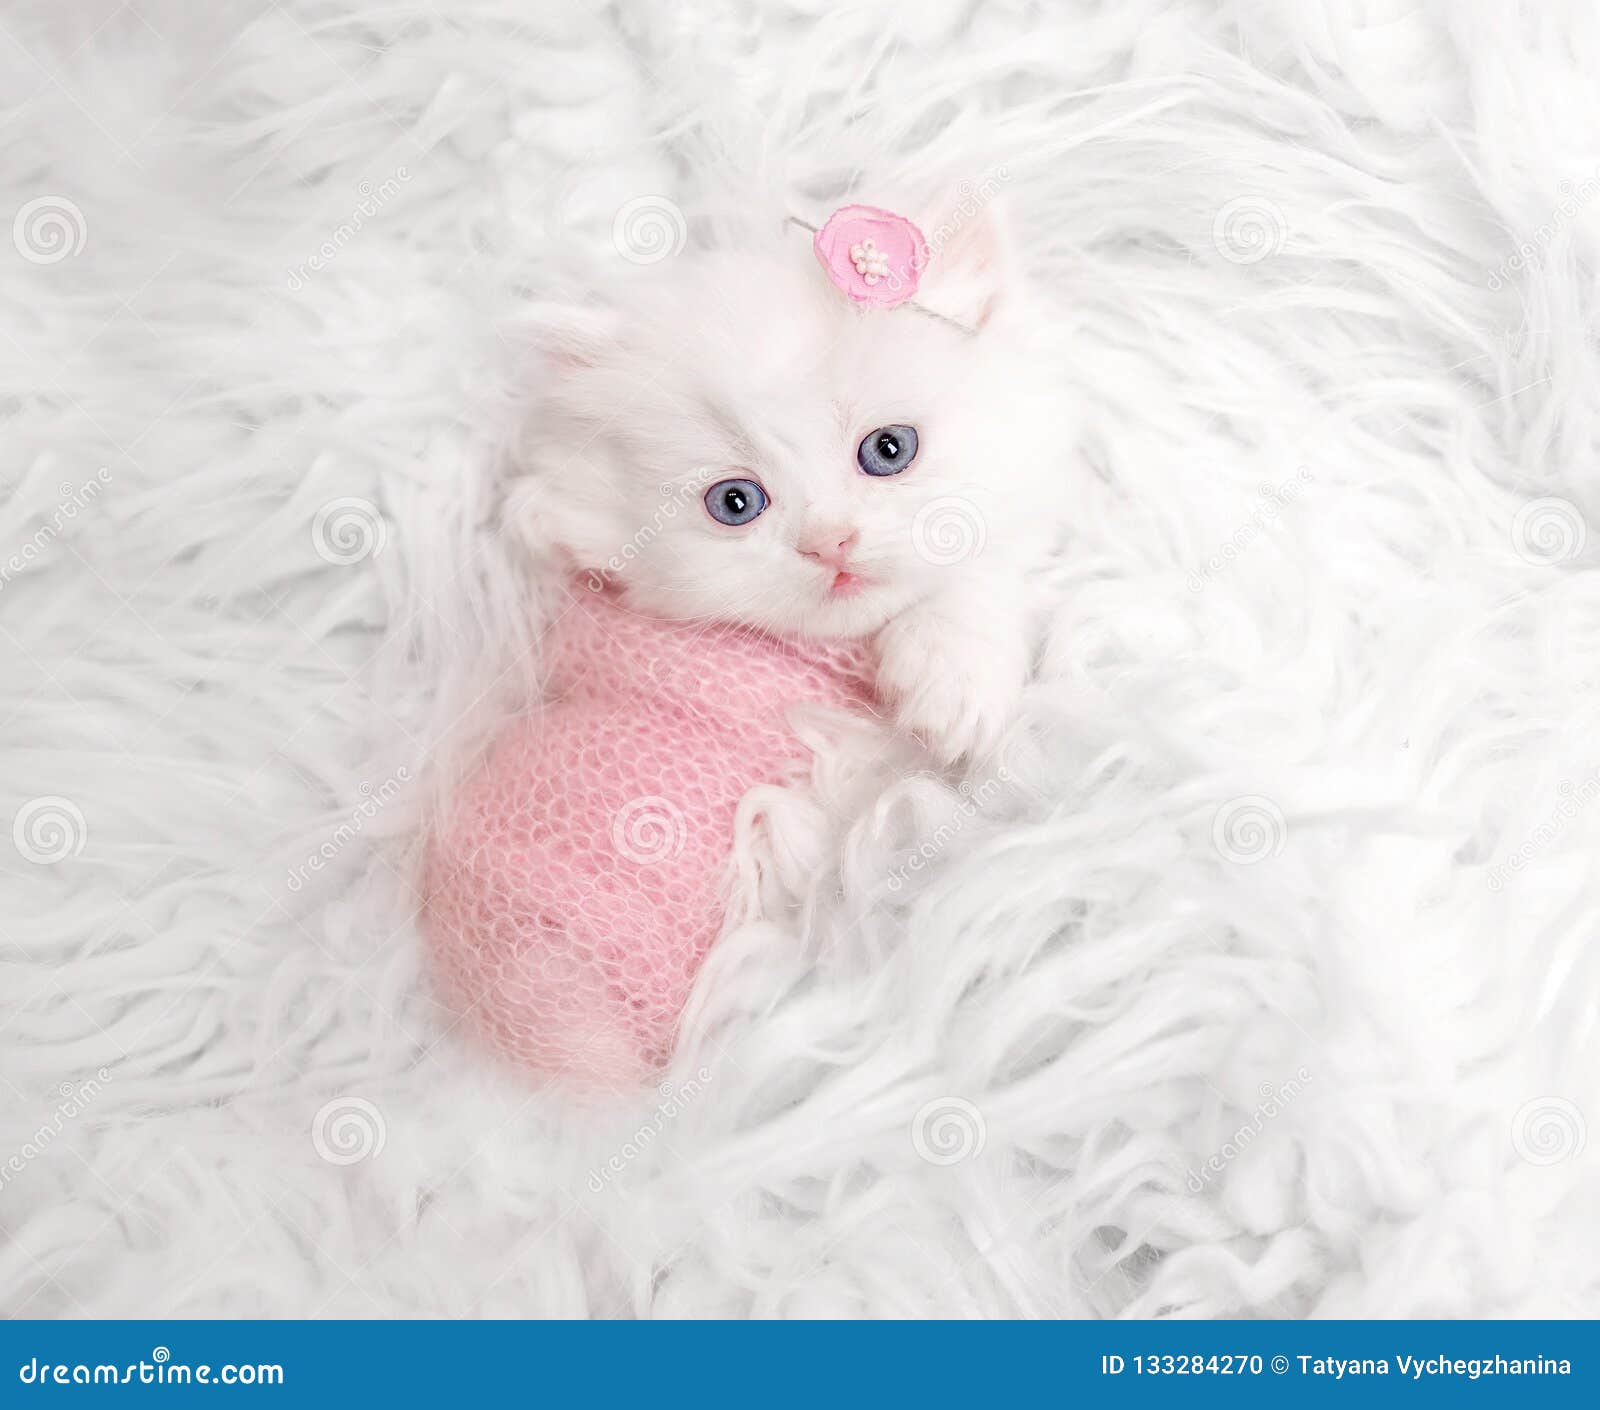 Newborn Scottish Kitten On White Fur Stock Photo Image Of Animals Curious 133284270